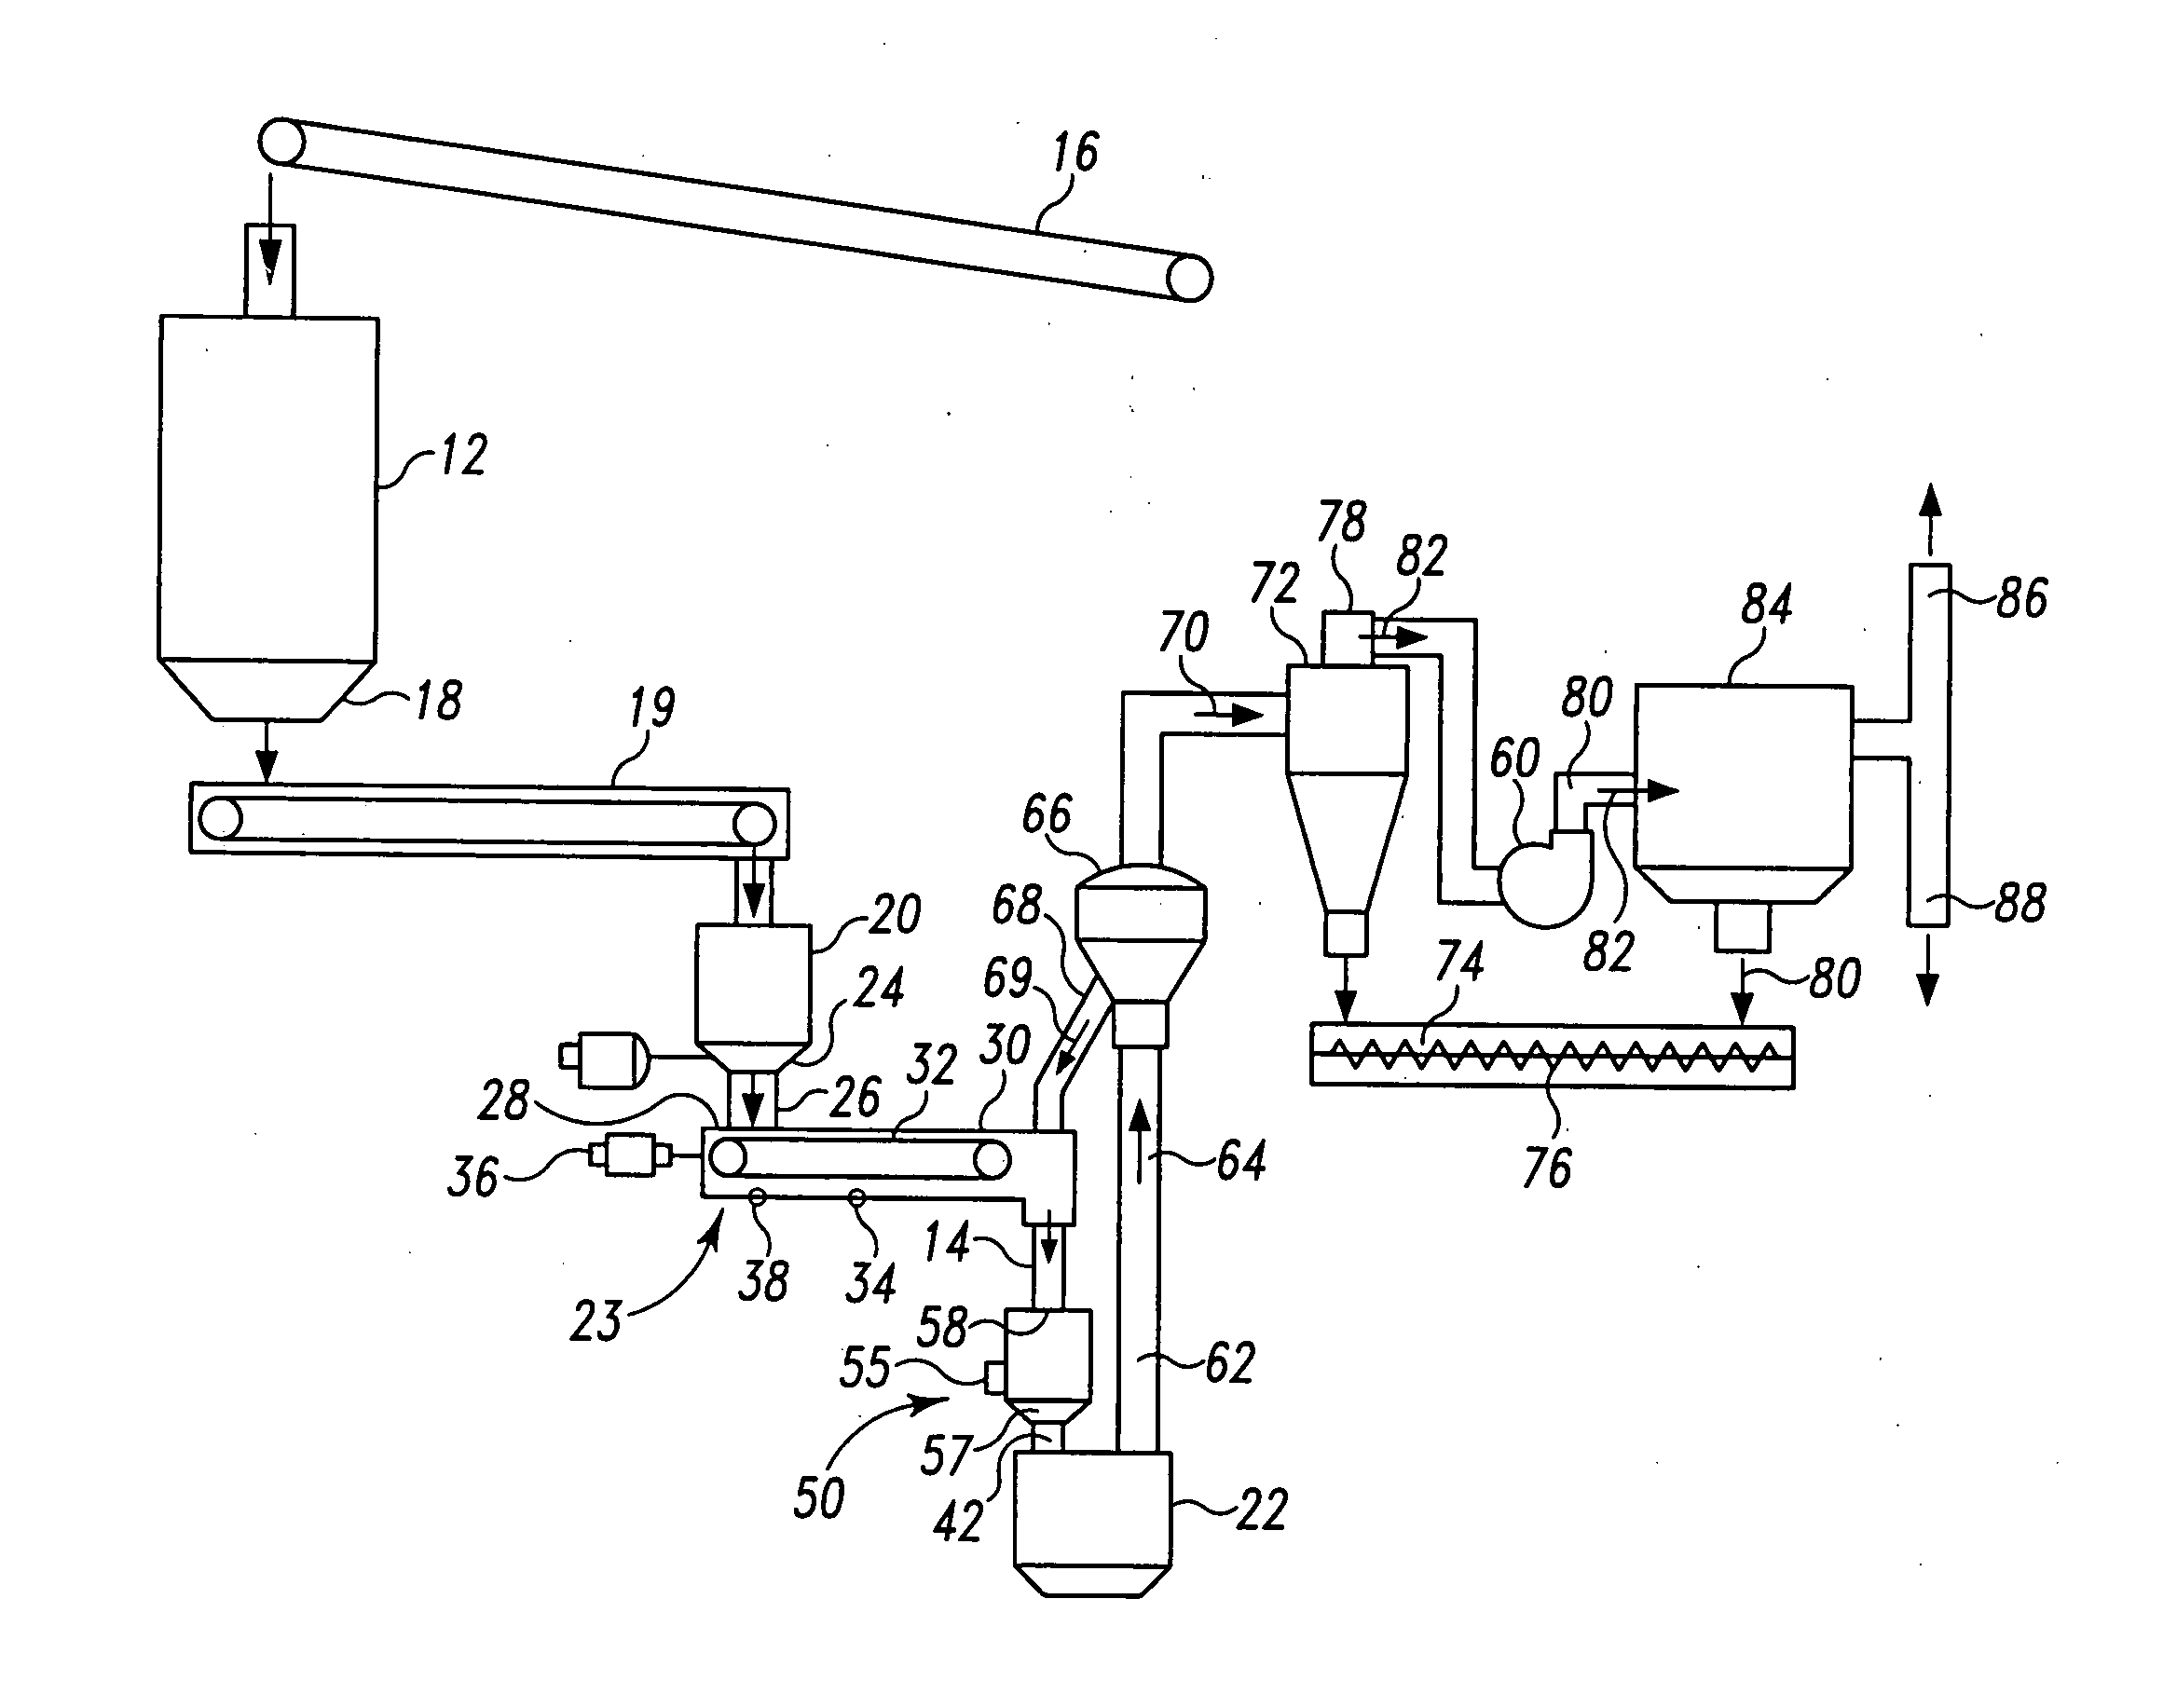 Method and apparatus for calcining gypsum